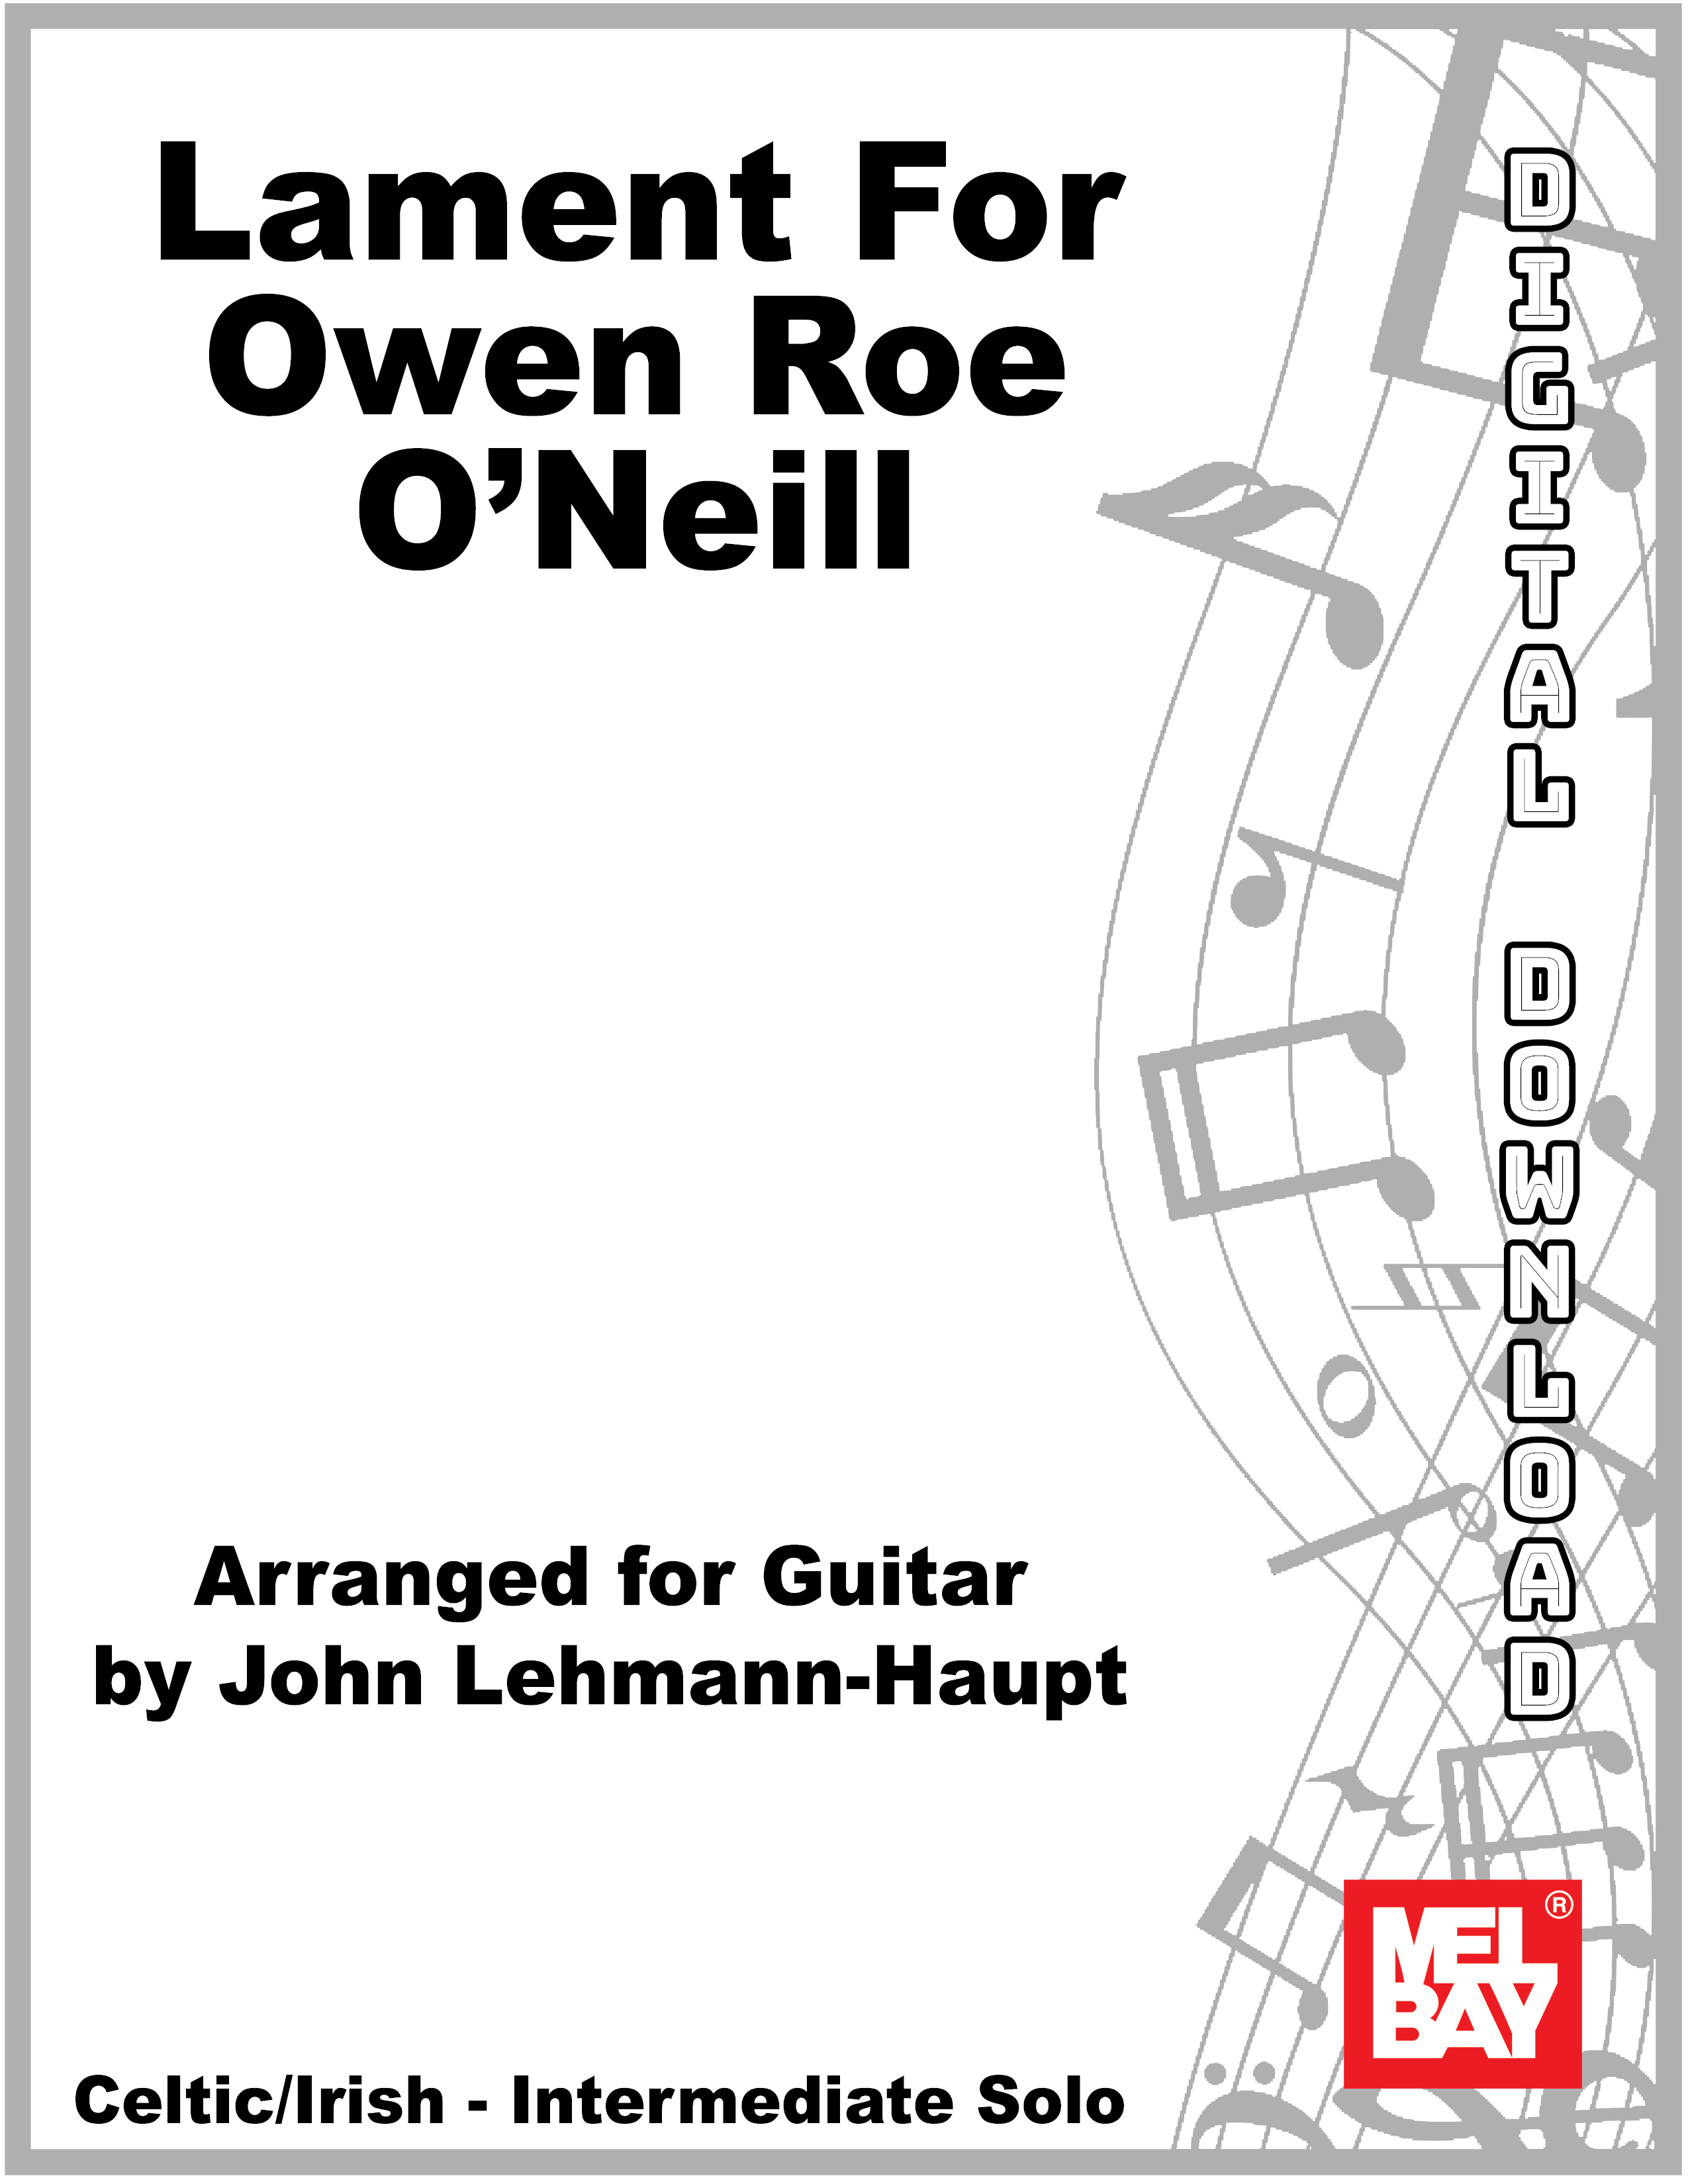 Lament for Owen Roe O'Neill